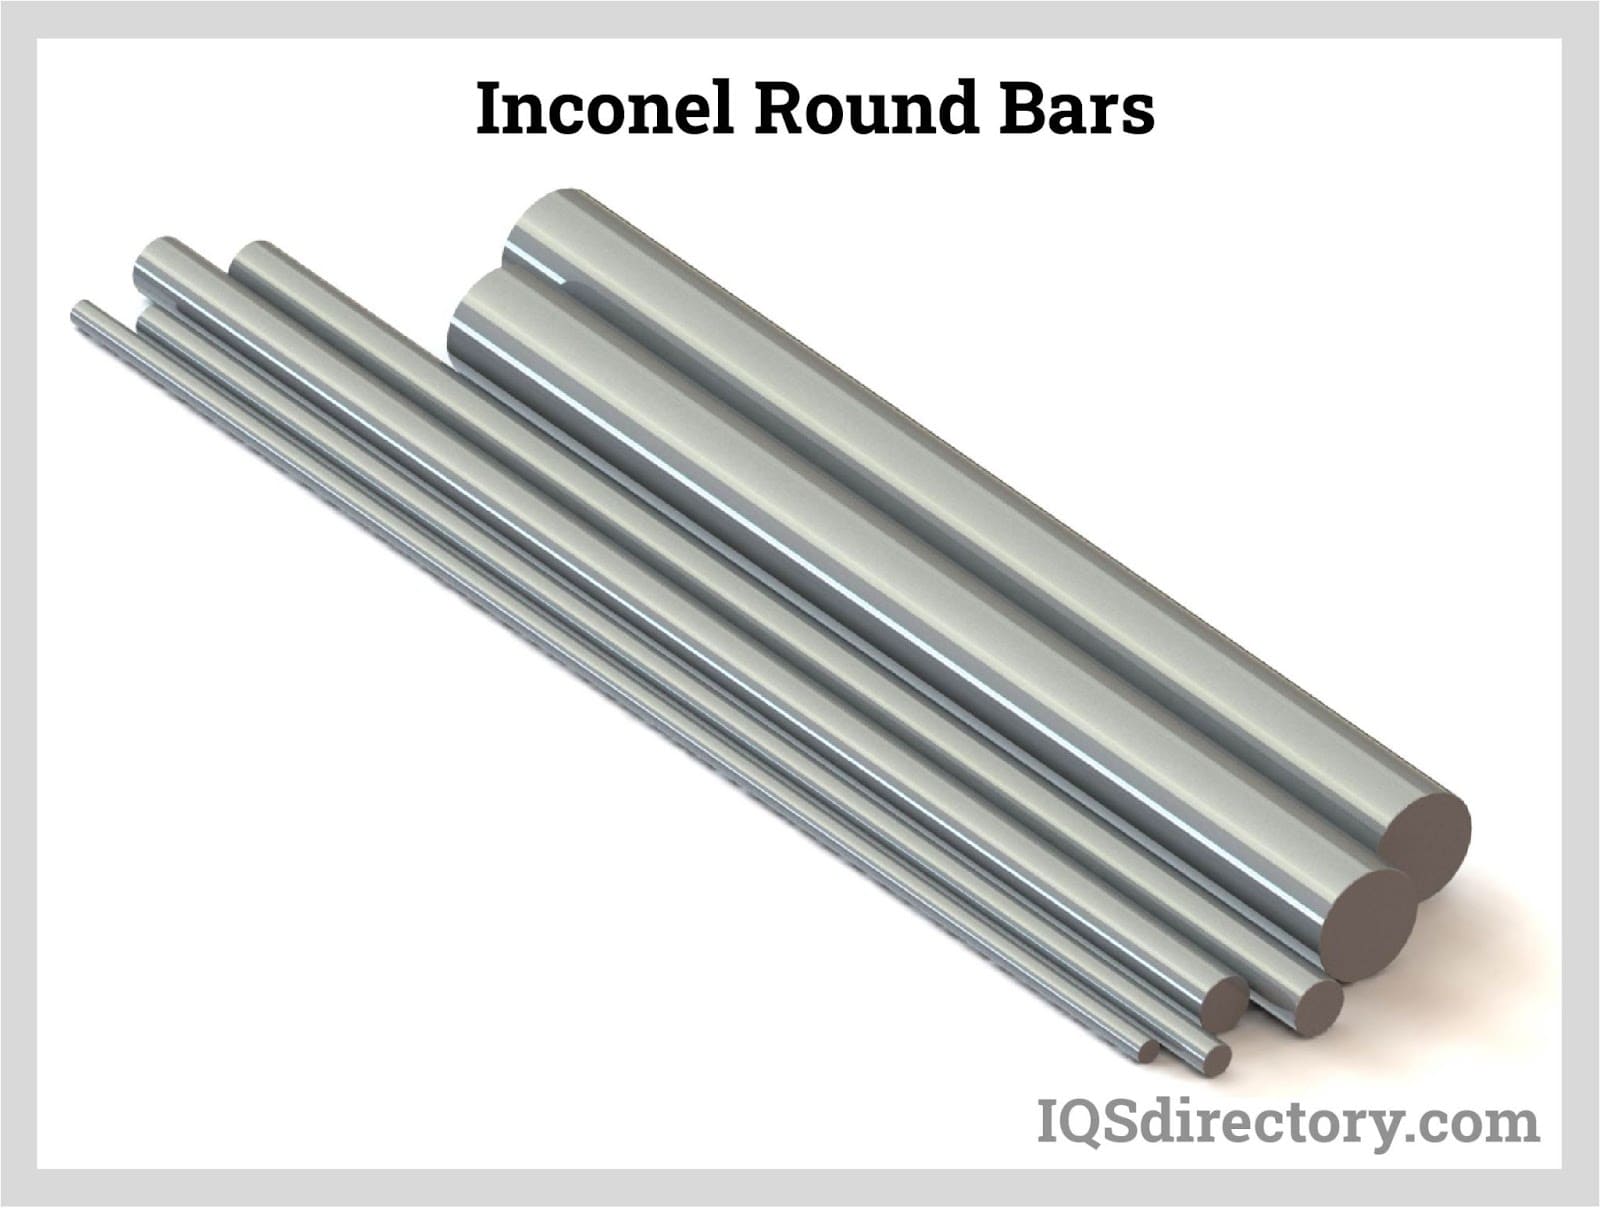 Inconel Round Bars